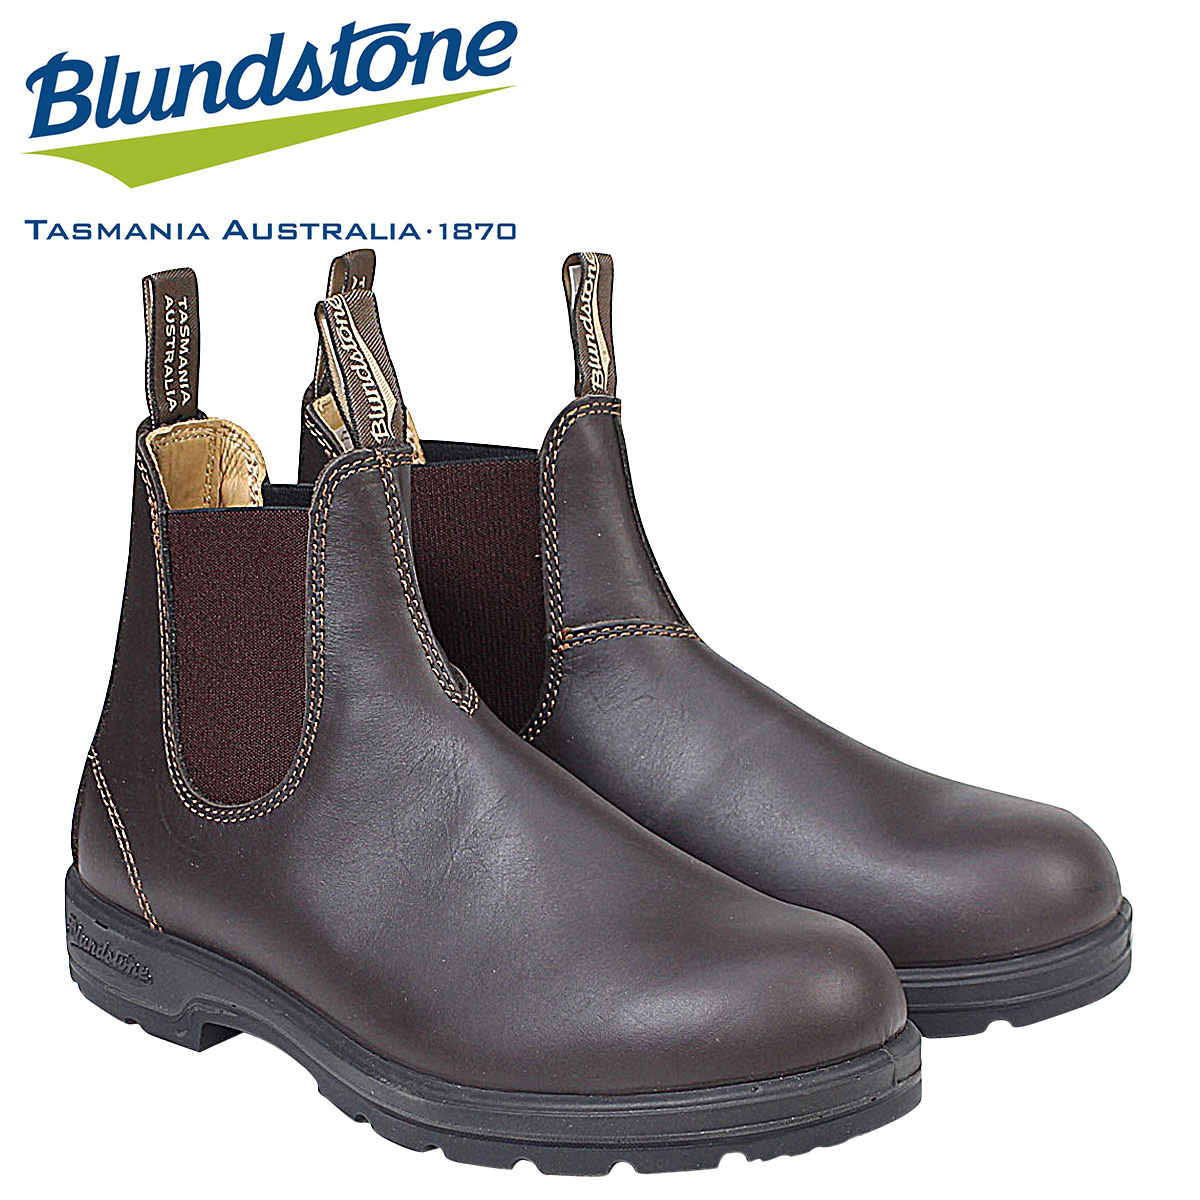 blundstone classic comfort 550